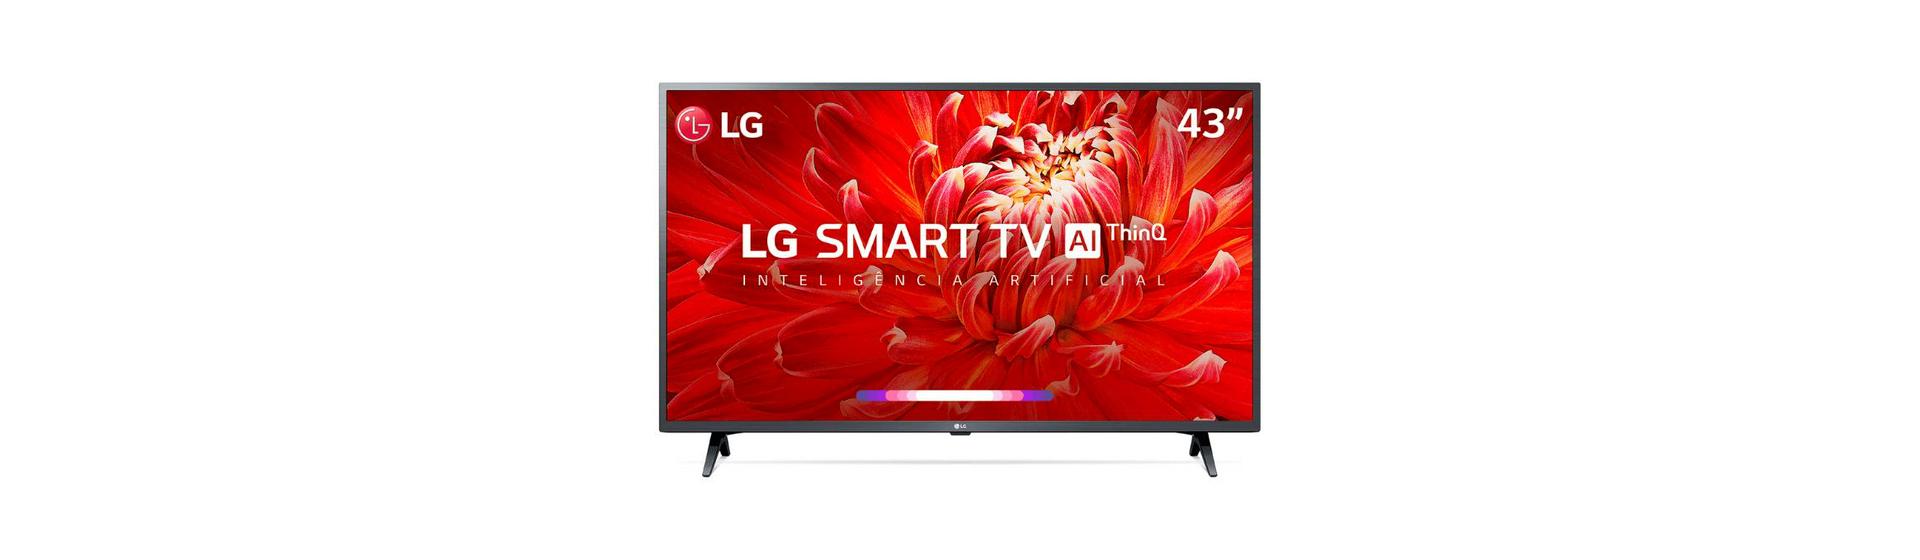 Smart TV LED 43 LG ThinQ AI Full HD HDR 43LM6370PSB com o Melhor